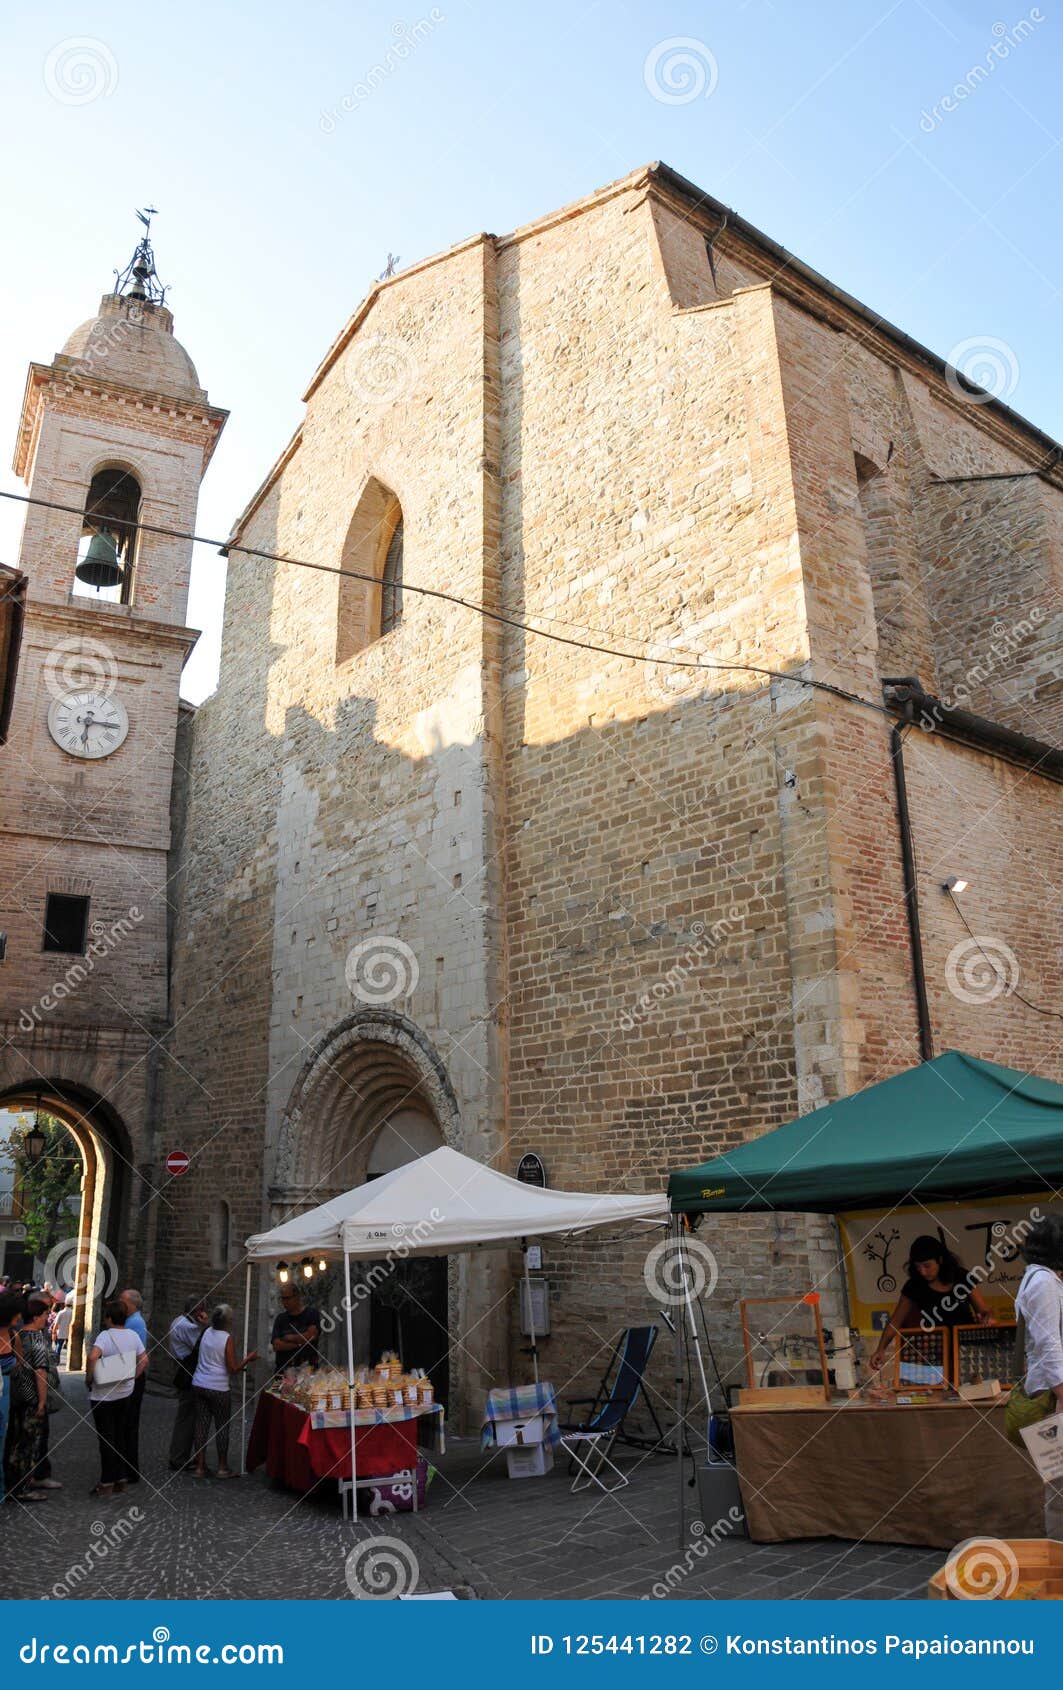 Church of San Francesco in Staffolo Medieval Village, Italy Editorial